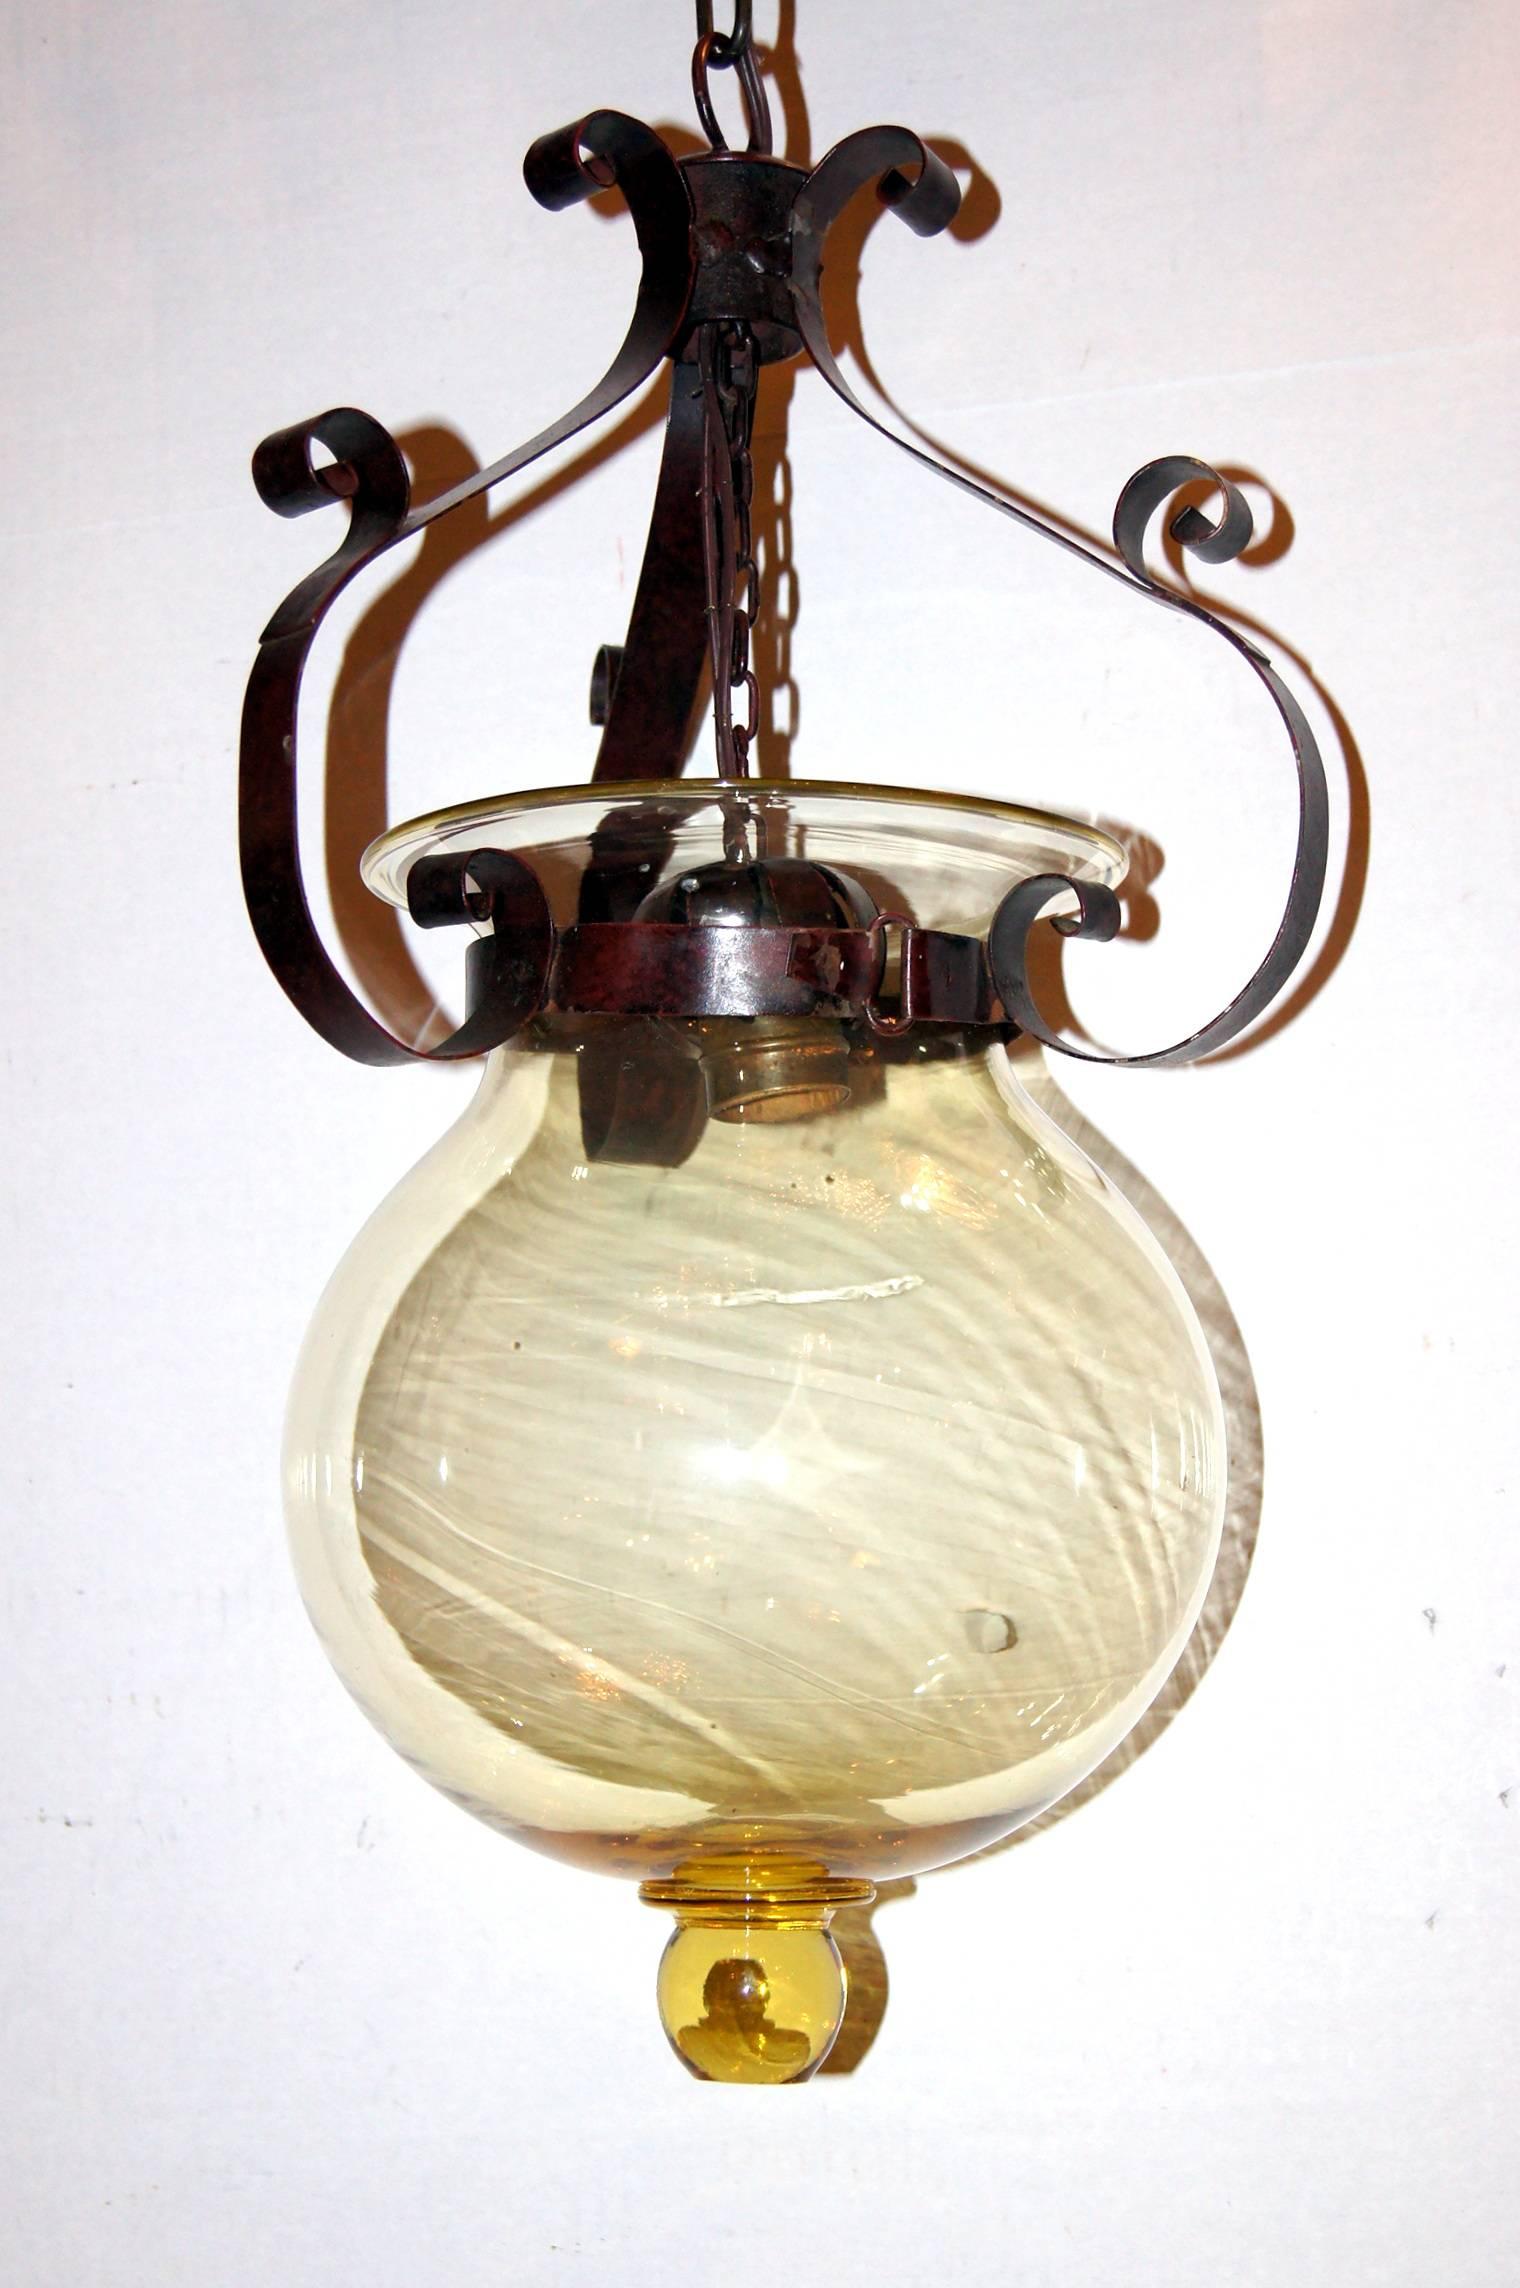 A circa 1920’s  blown glass Venetian lantern with hammered metal body.

Measurements:
Drop: 20″
Diameter: 7.75″.